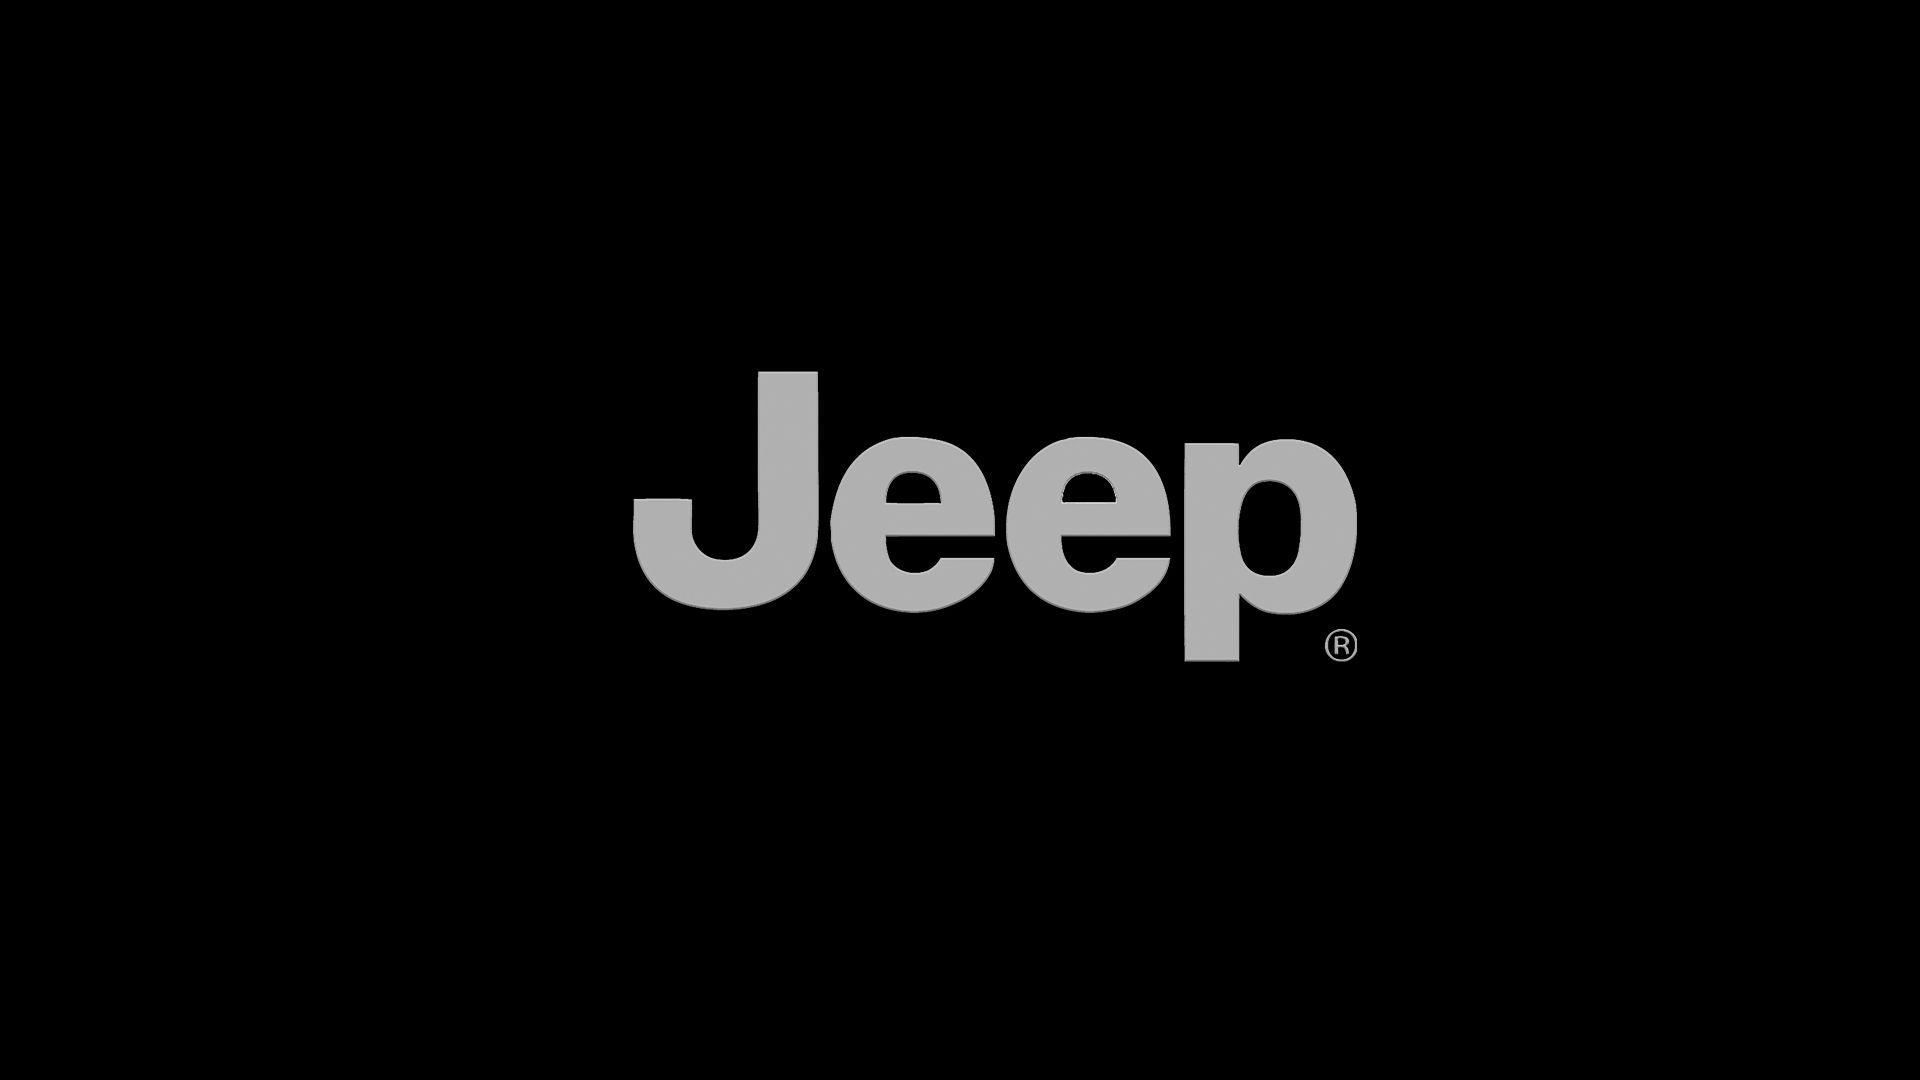 Cool Jeep Logo - Jeep Logo Black wallpaper 2018 in Brands & Logos